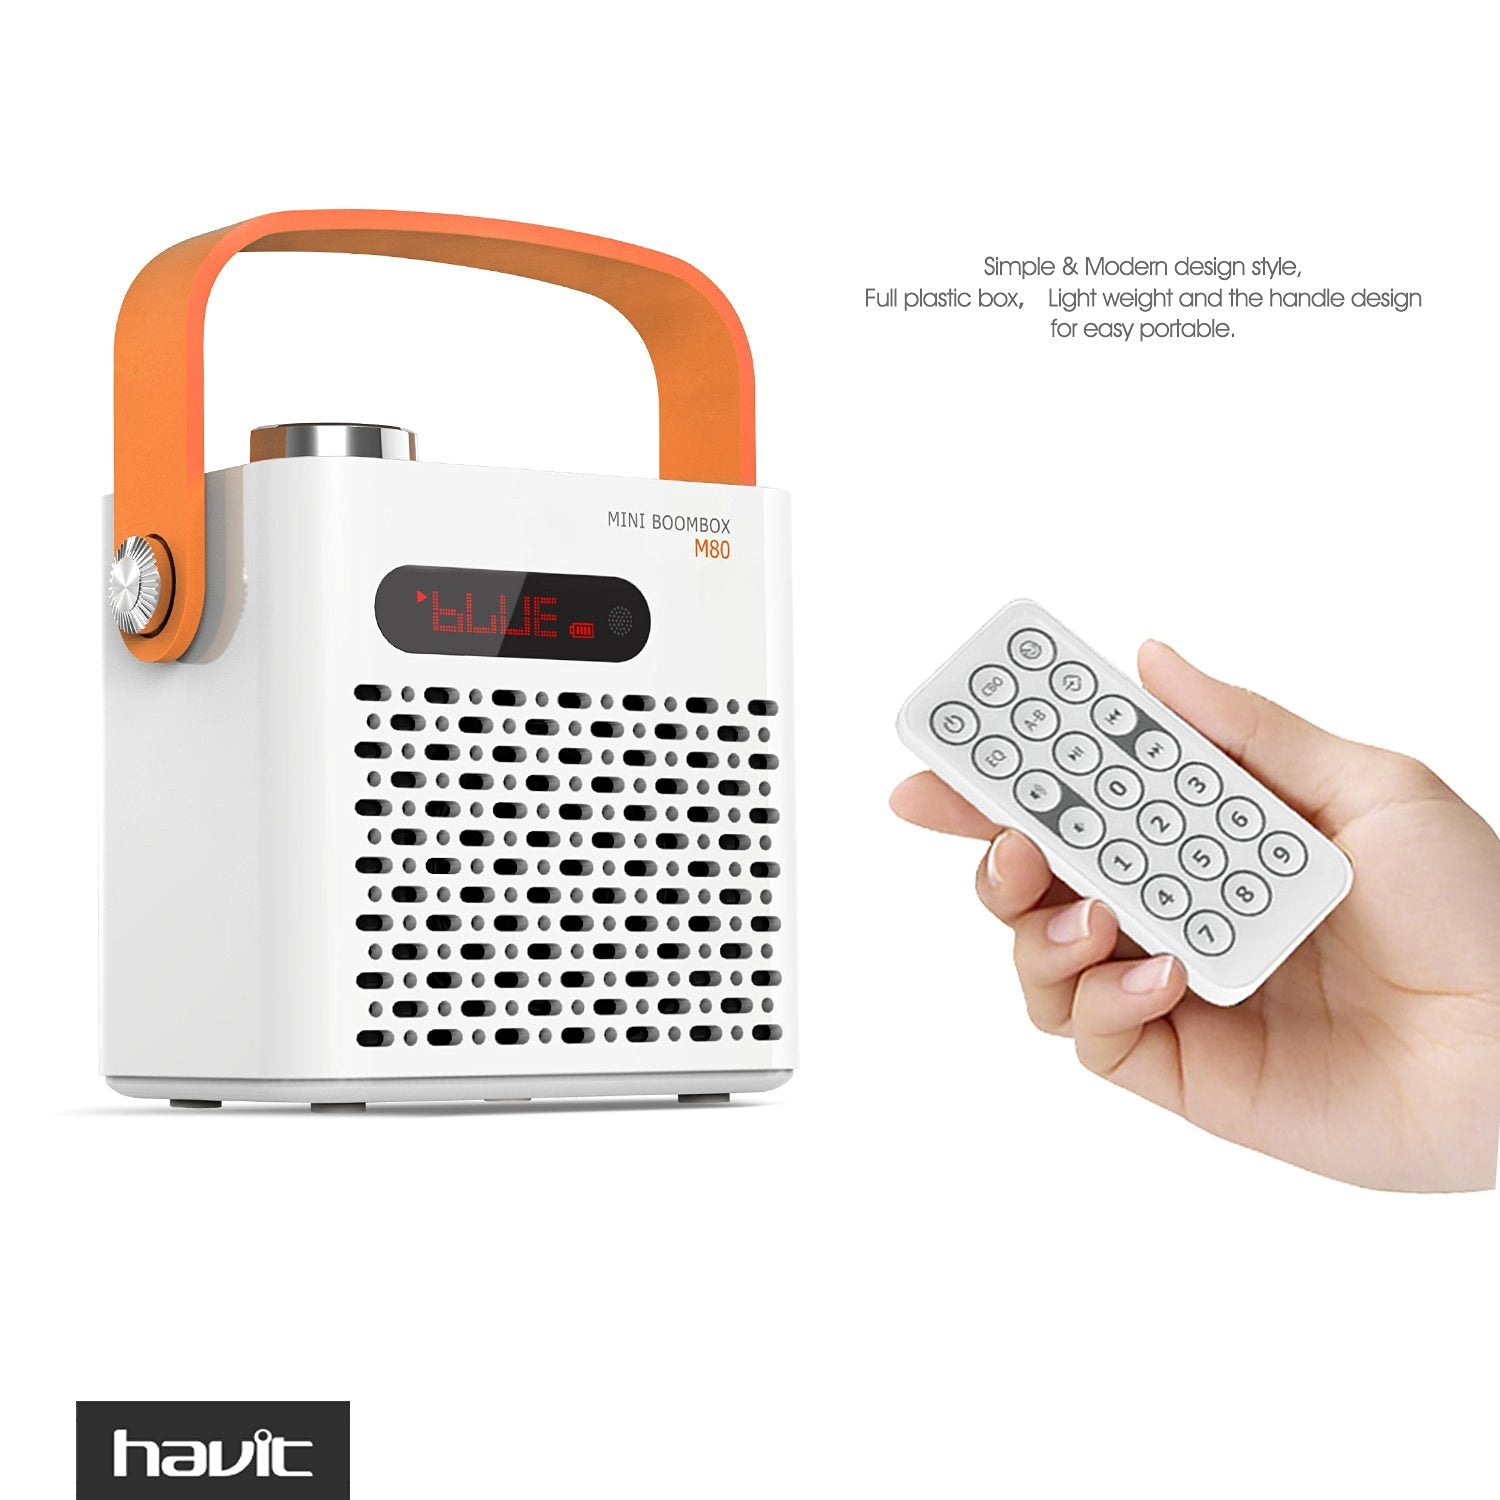 HAVIT M80 Ibox Portable Bluetooth Speaker / Outdoor Mini Boombox